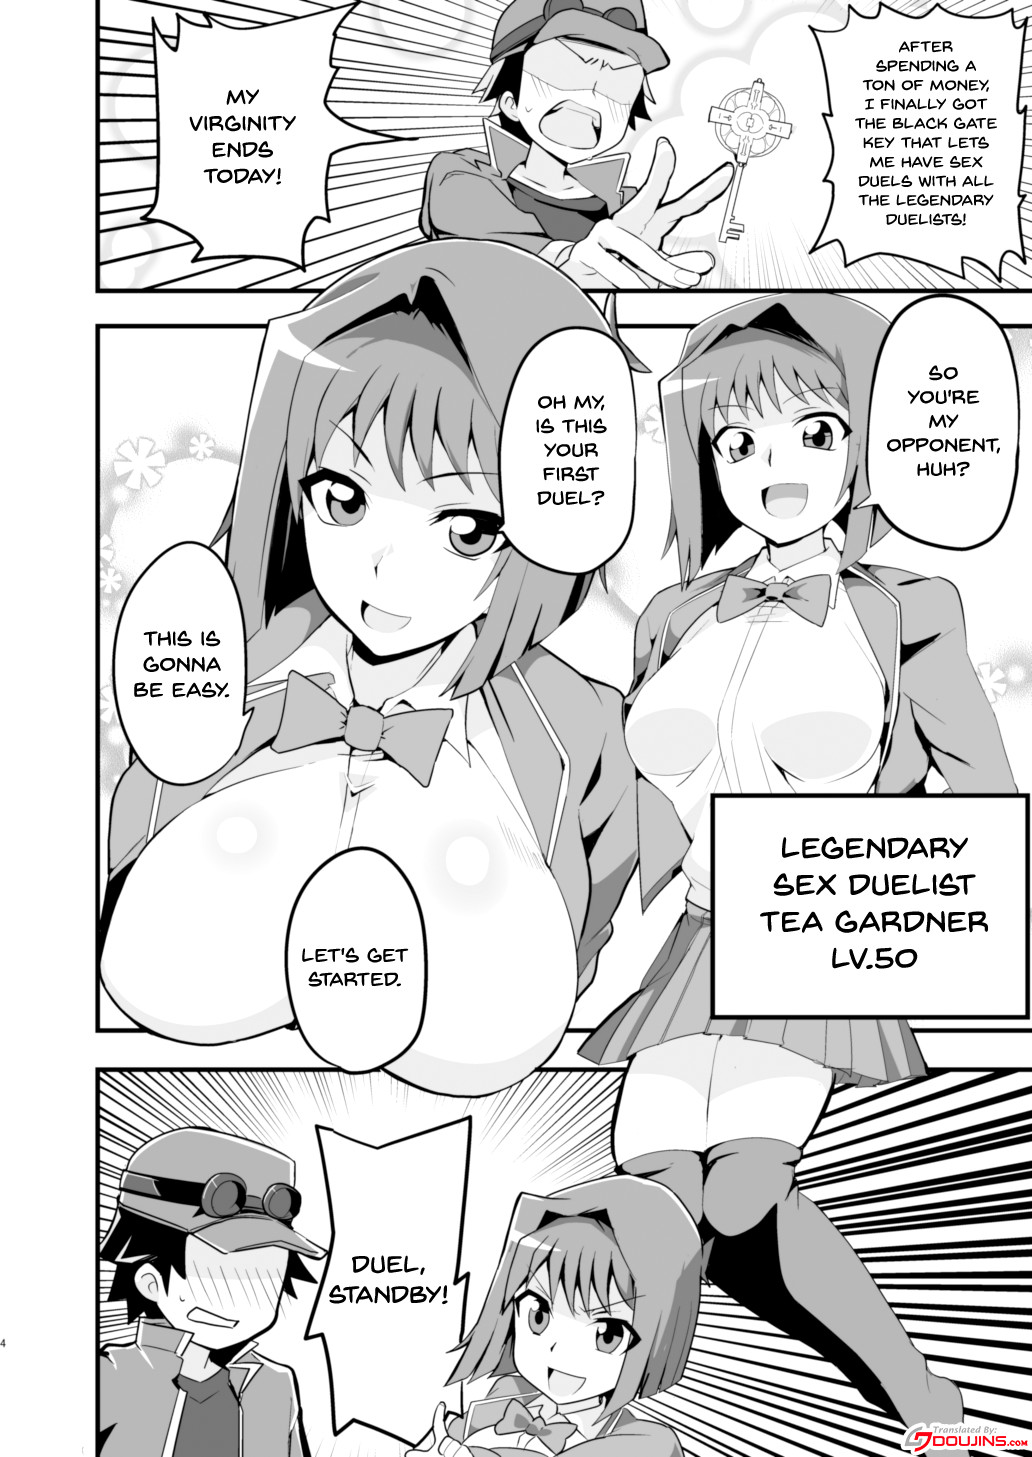 Hentai Manga Comic-Enjoy Sex Links-v22m-Read-3